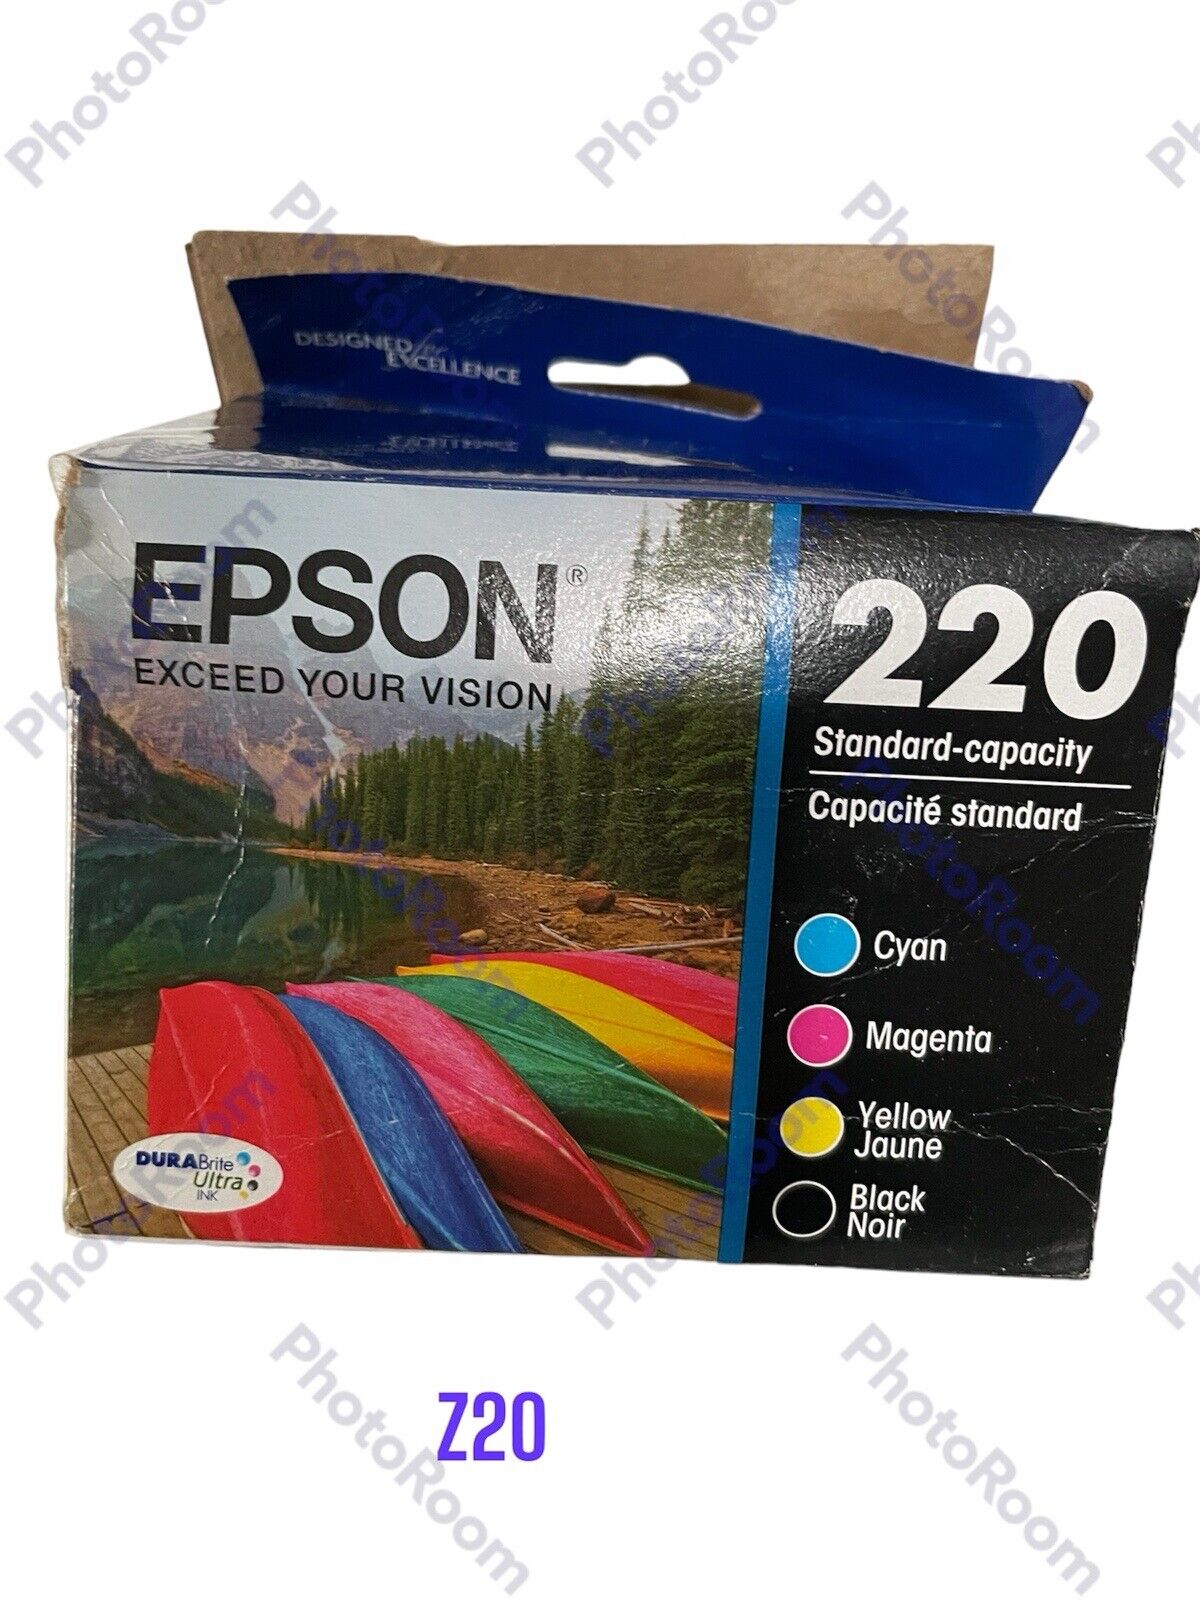 Epson DURABrite Ultra 220 Ink Cartridges - Black/Cyan/Magenta/Yellow, 4 Pack